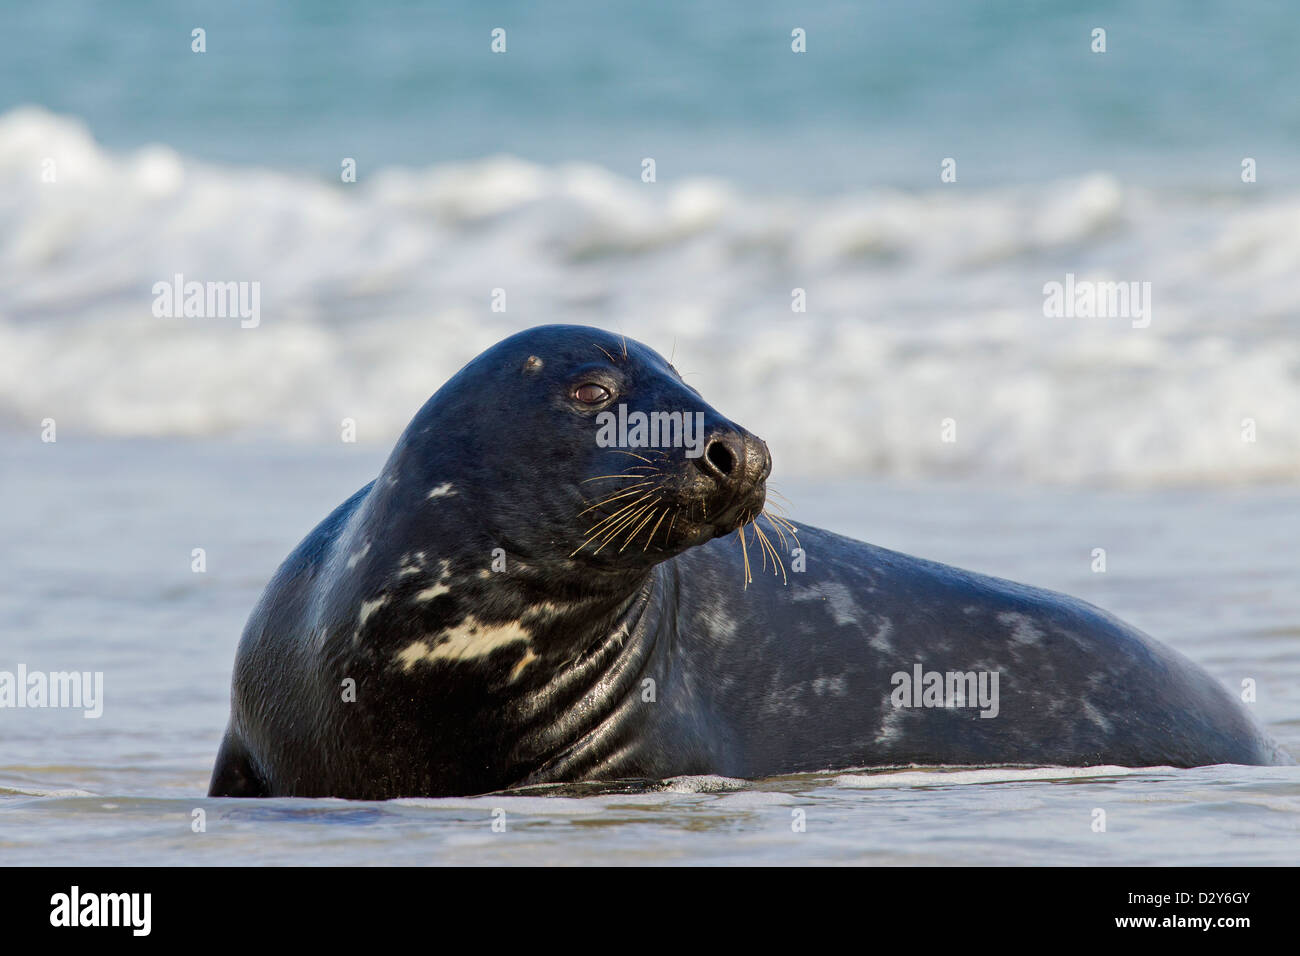 Atlantic Grey seal / gray seal (Halichoerus grypus) lying on beach in the surf Stock Photo